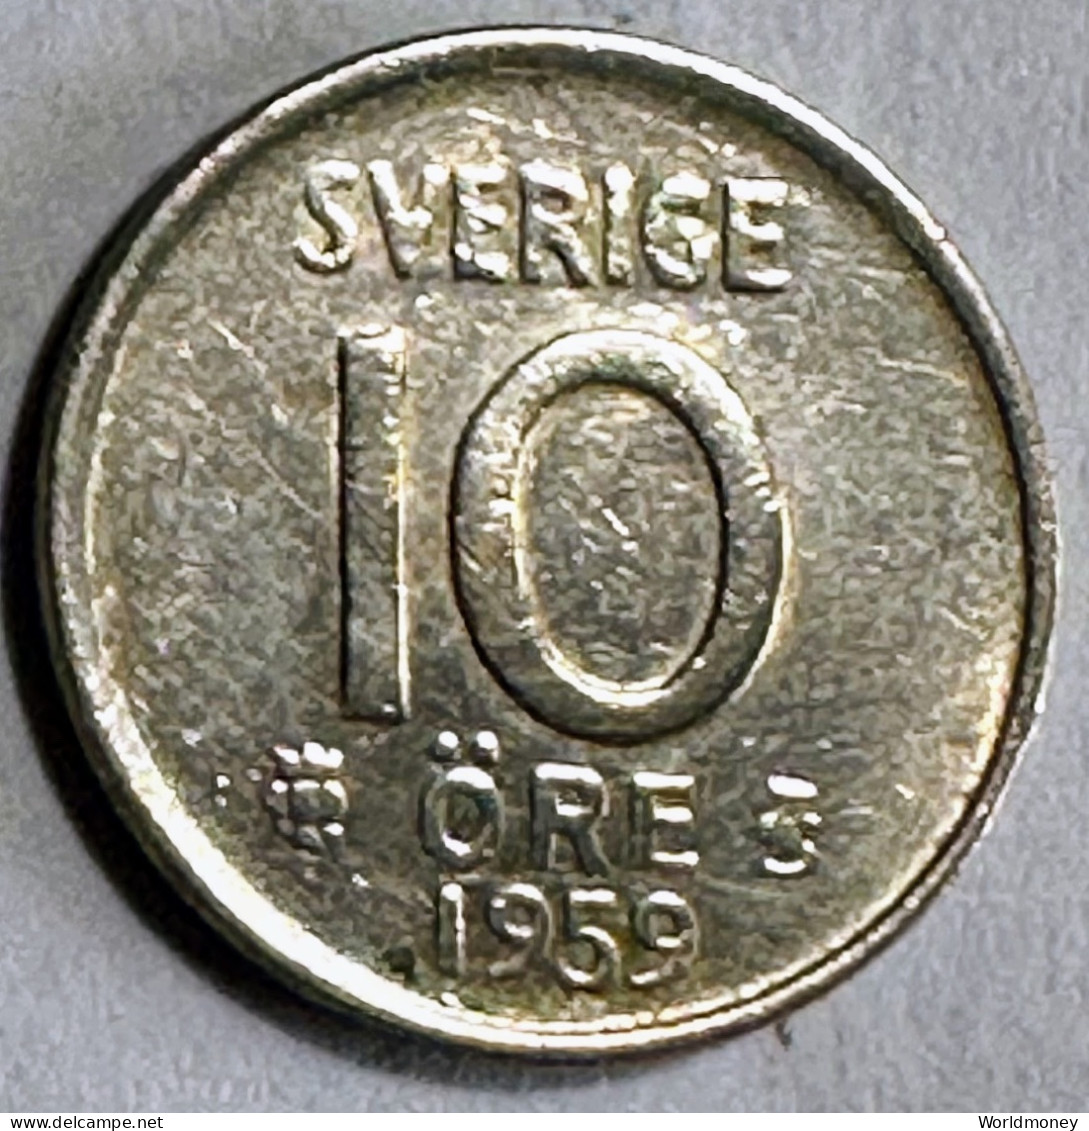 Sweden 10 Ore 1959 (Silver) - Sweden